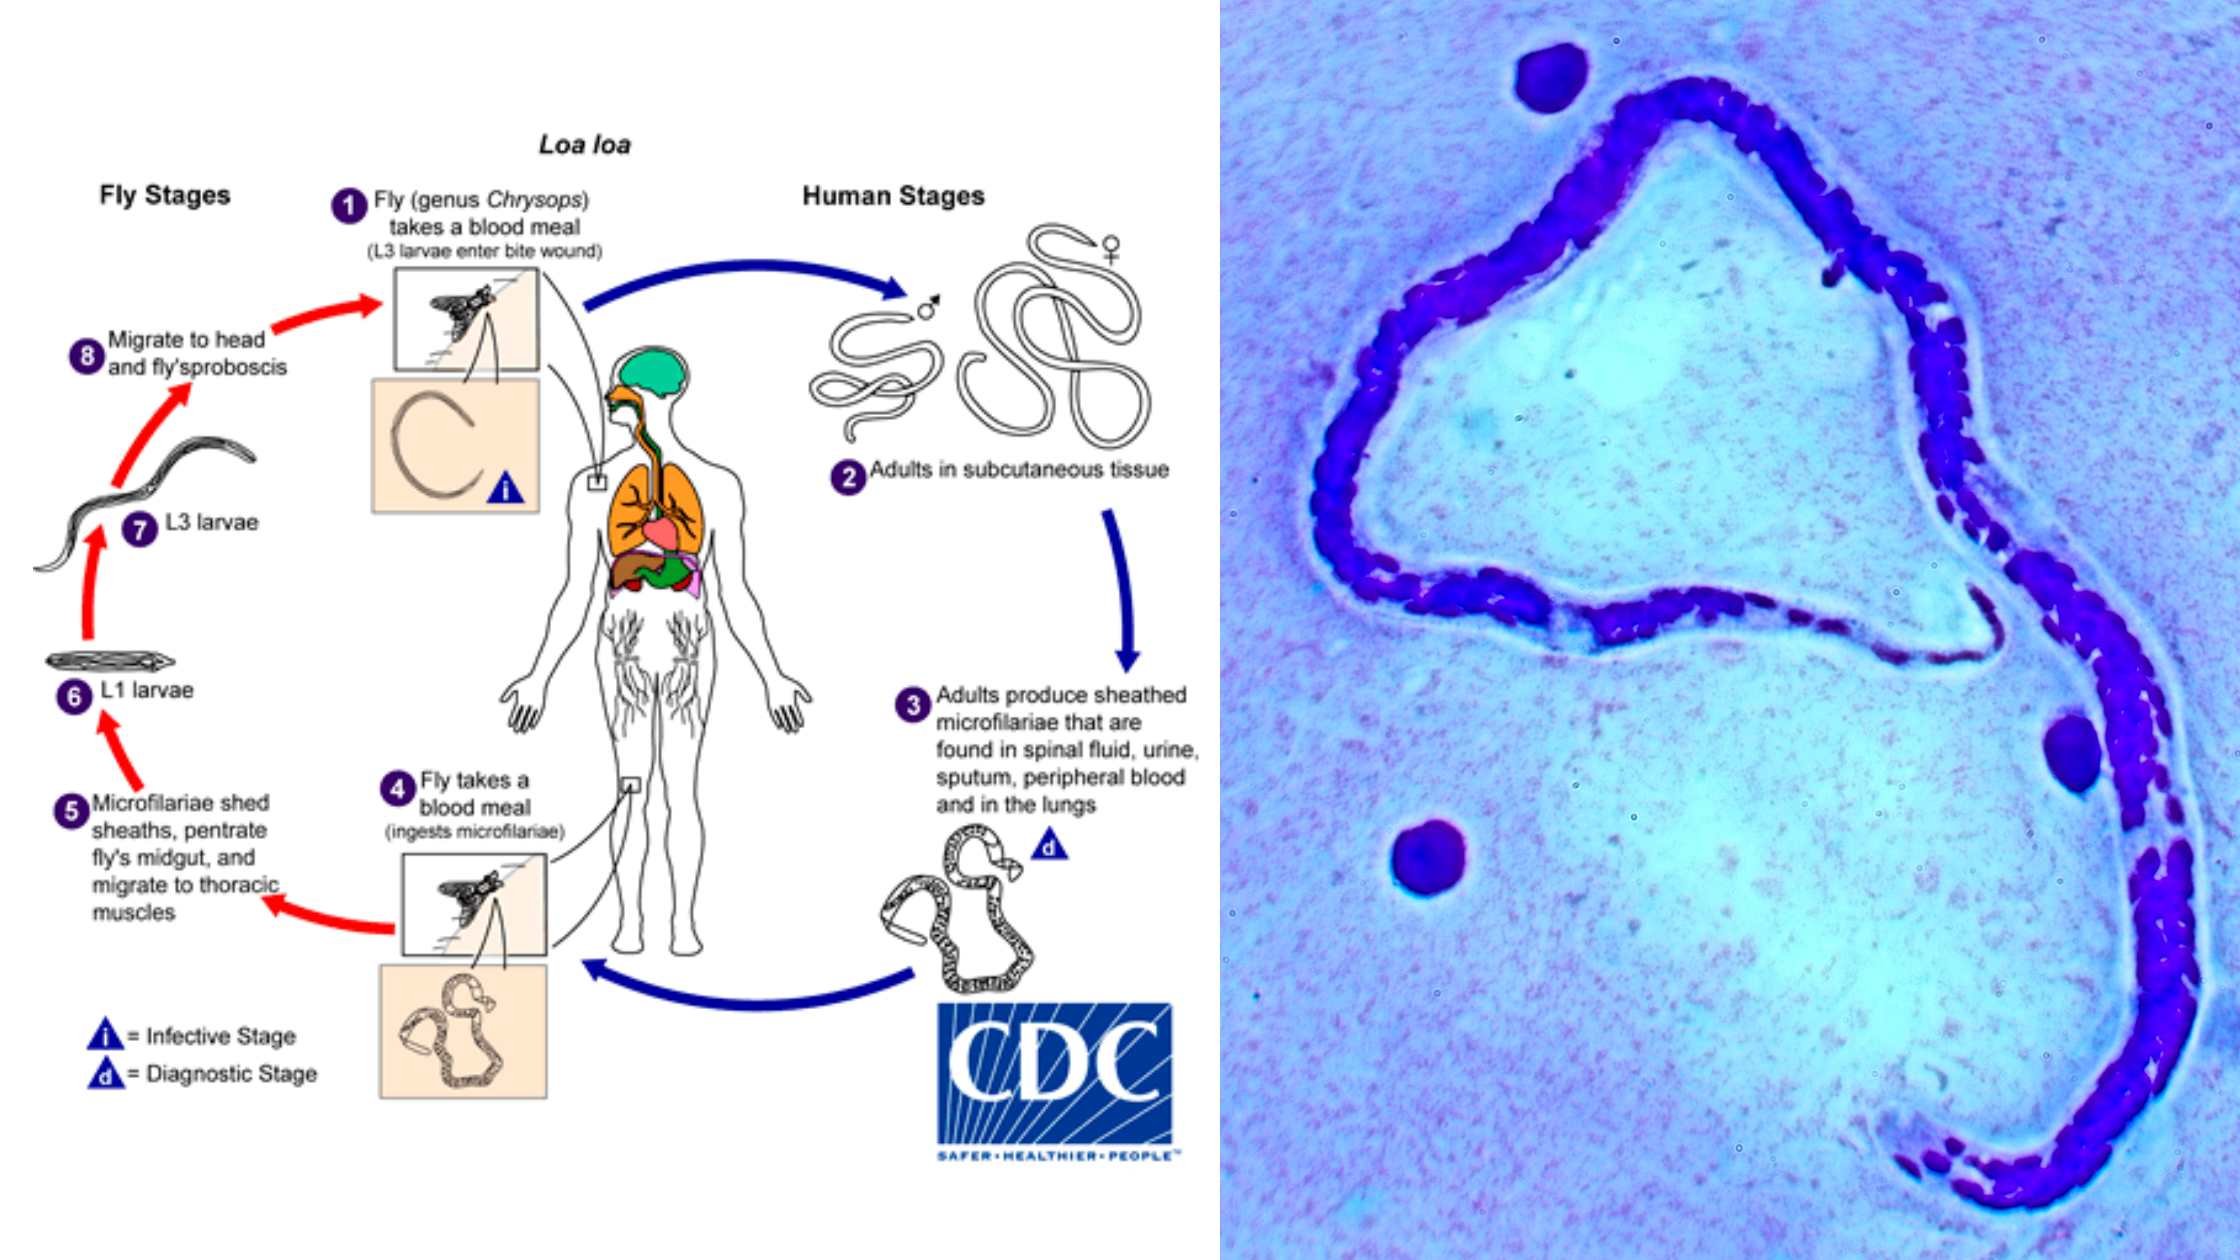 Loa loa Life cycle, Morphology, Pathogenesis, Diagnosis, Transmission, Treatment